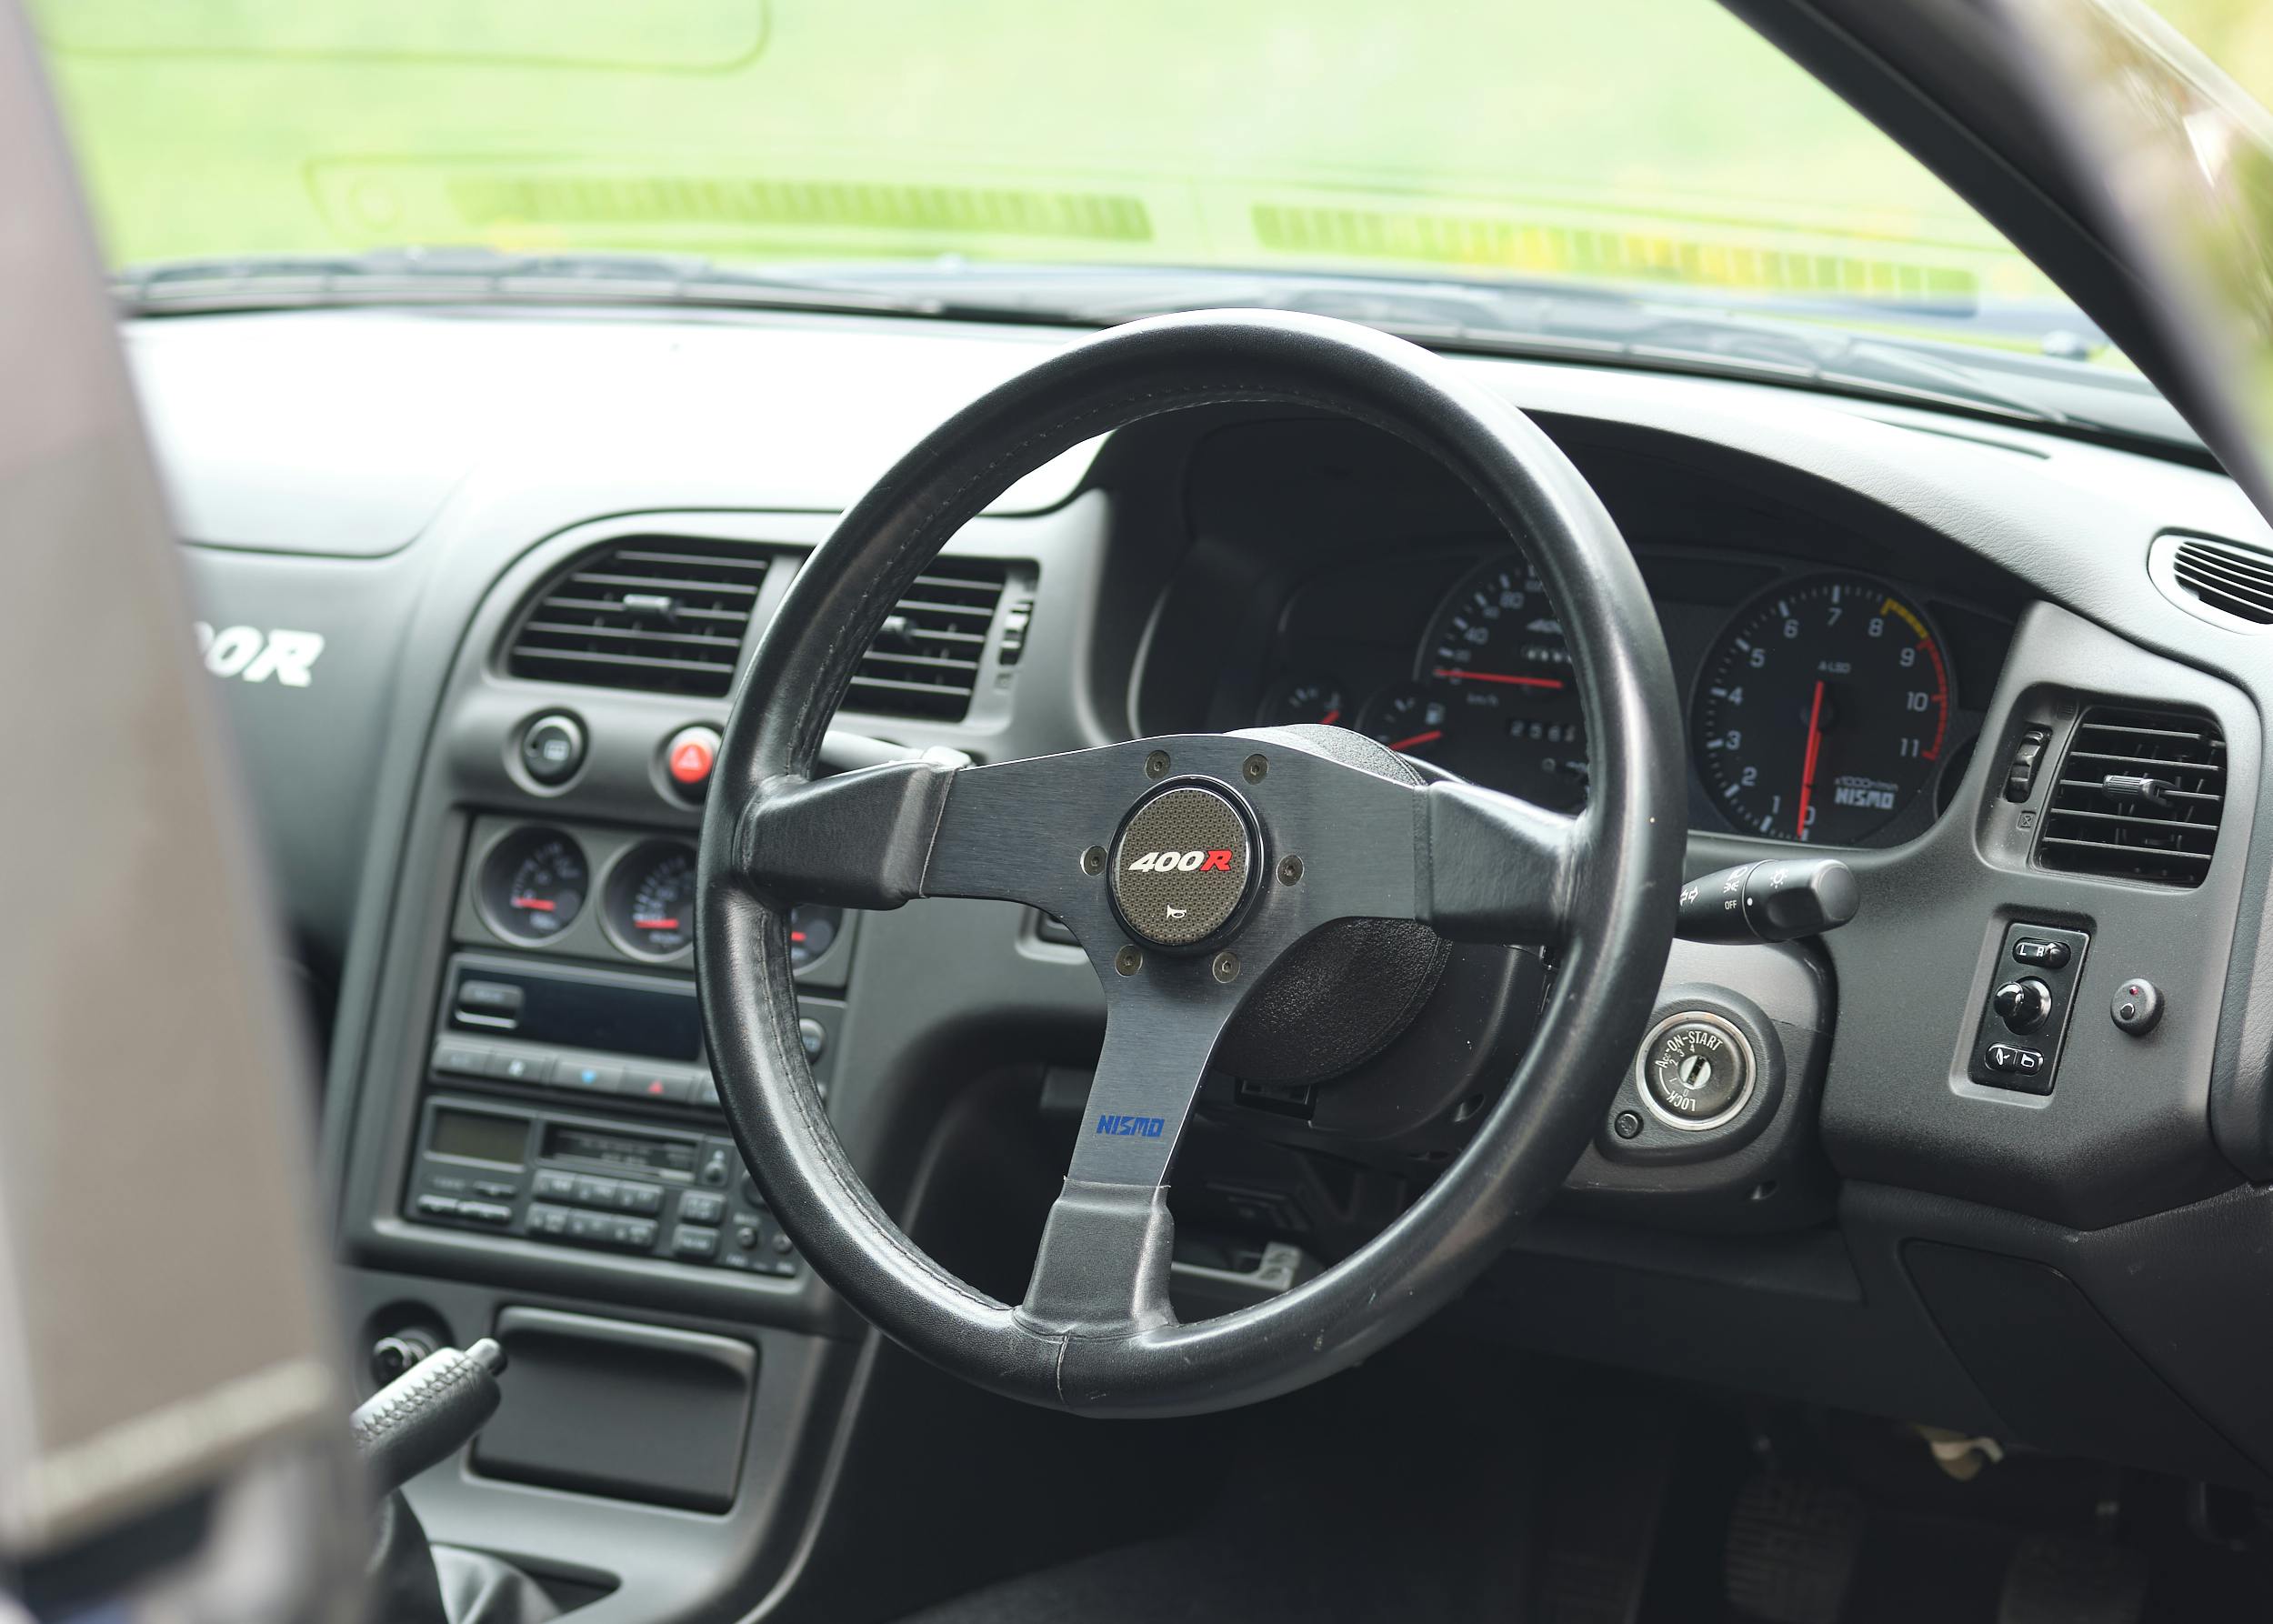 1996 Nissan Skyline R33 GT-R NISMO 400R interior steering wheel